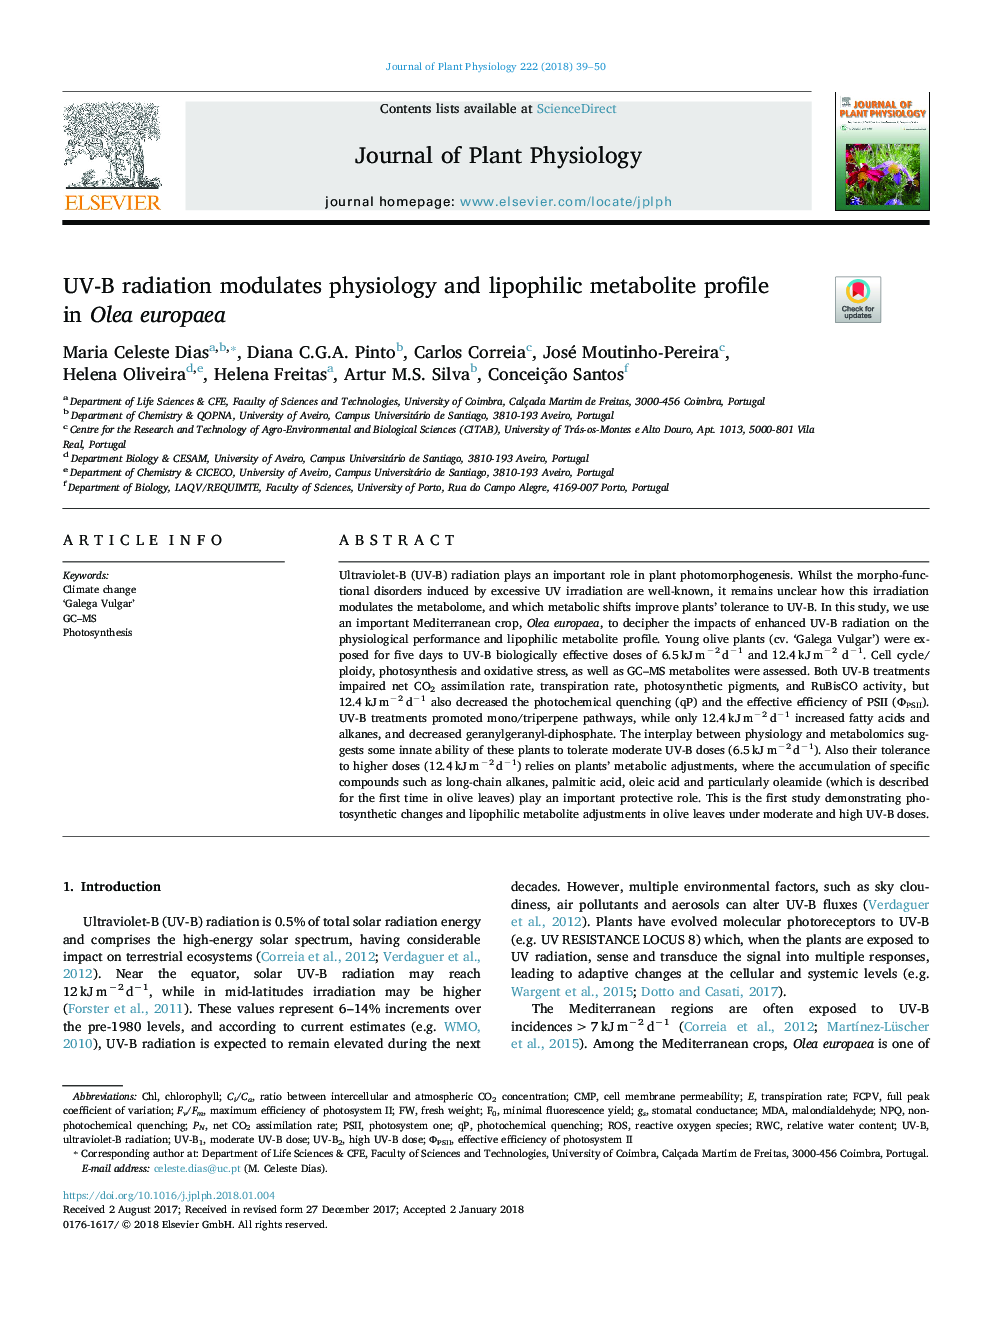 UV-B radiation modulates physiology and lipophilic metabolite profile in Olea europaea